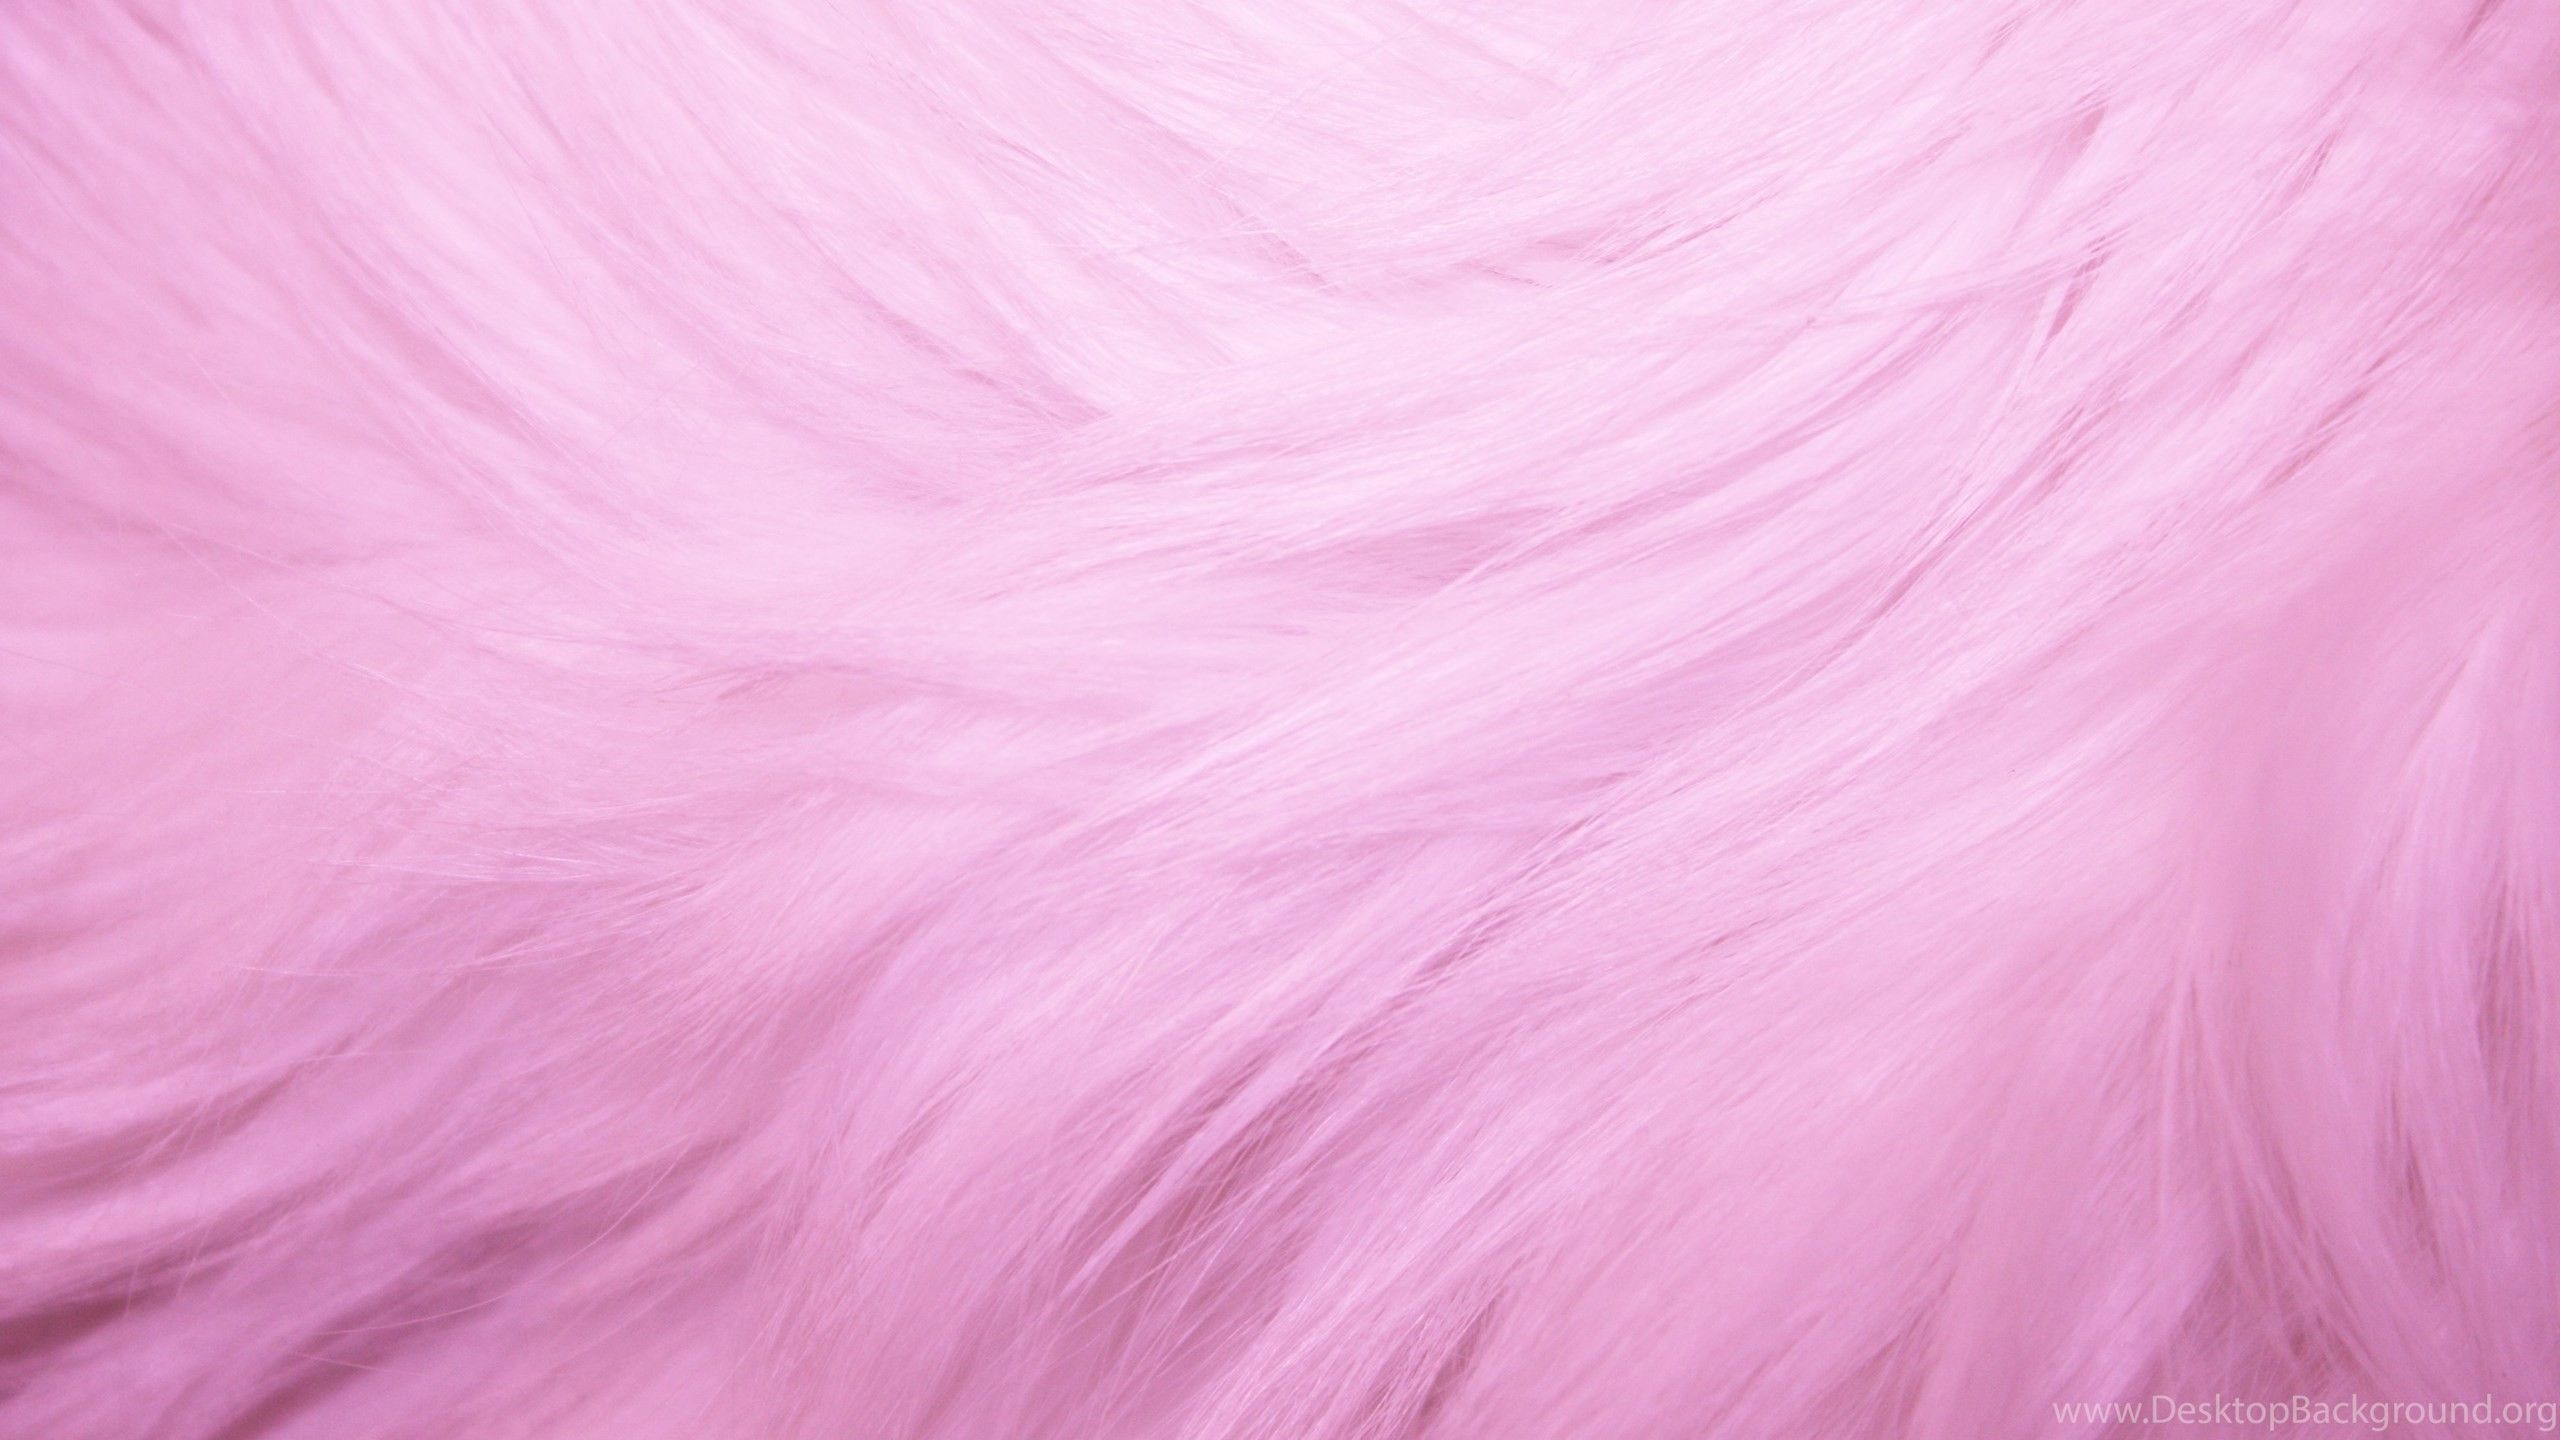 2560x1440 Pink Fur Wallpaper